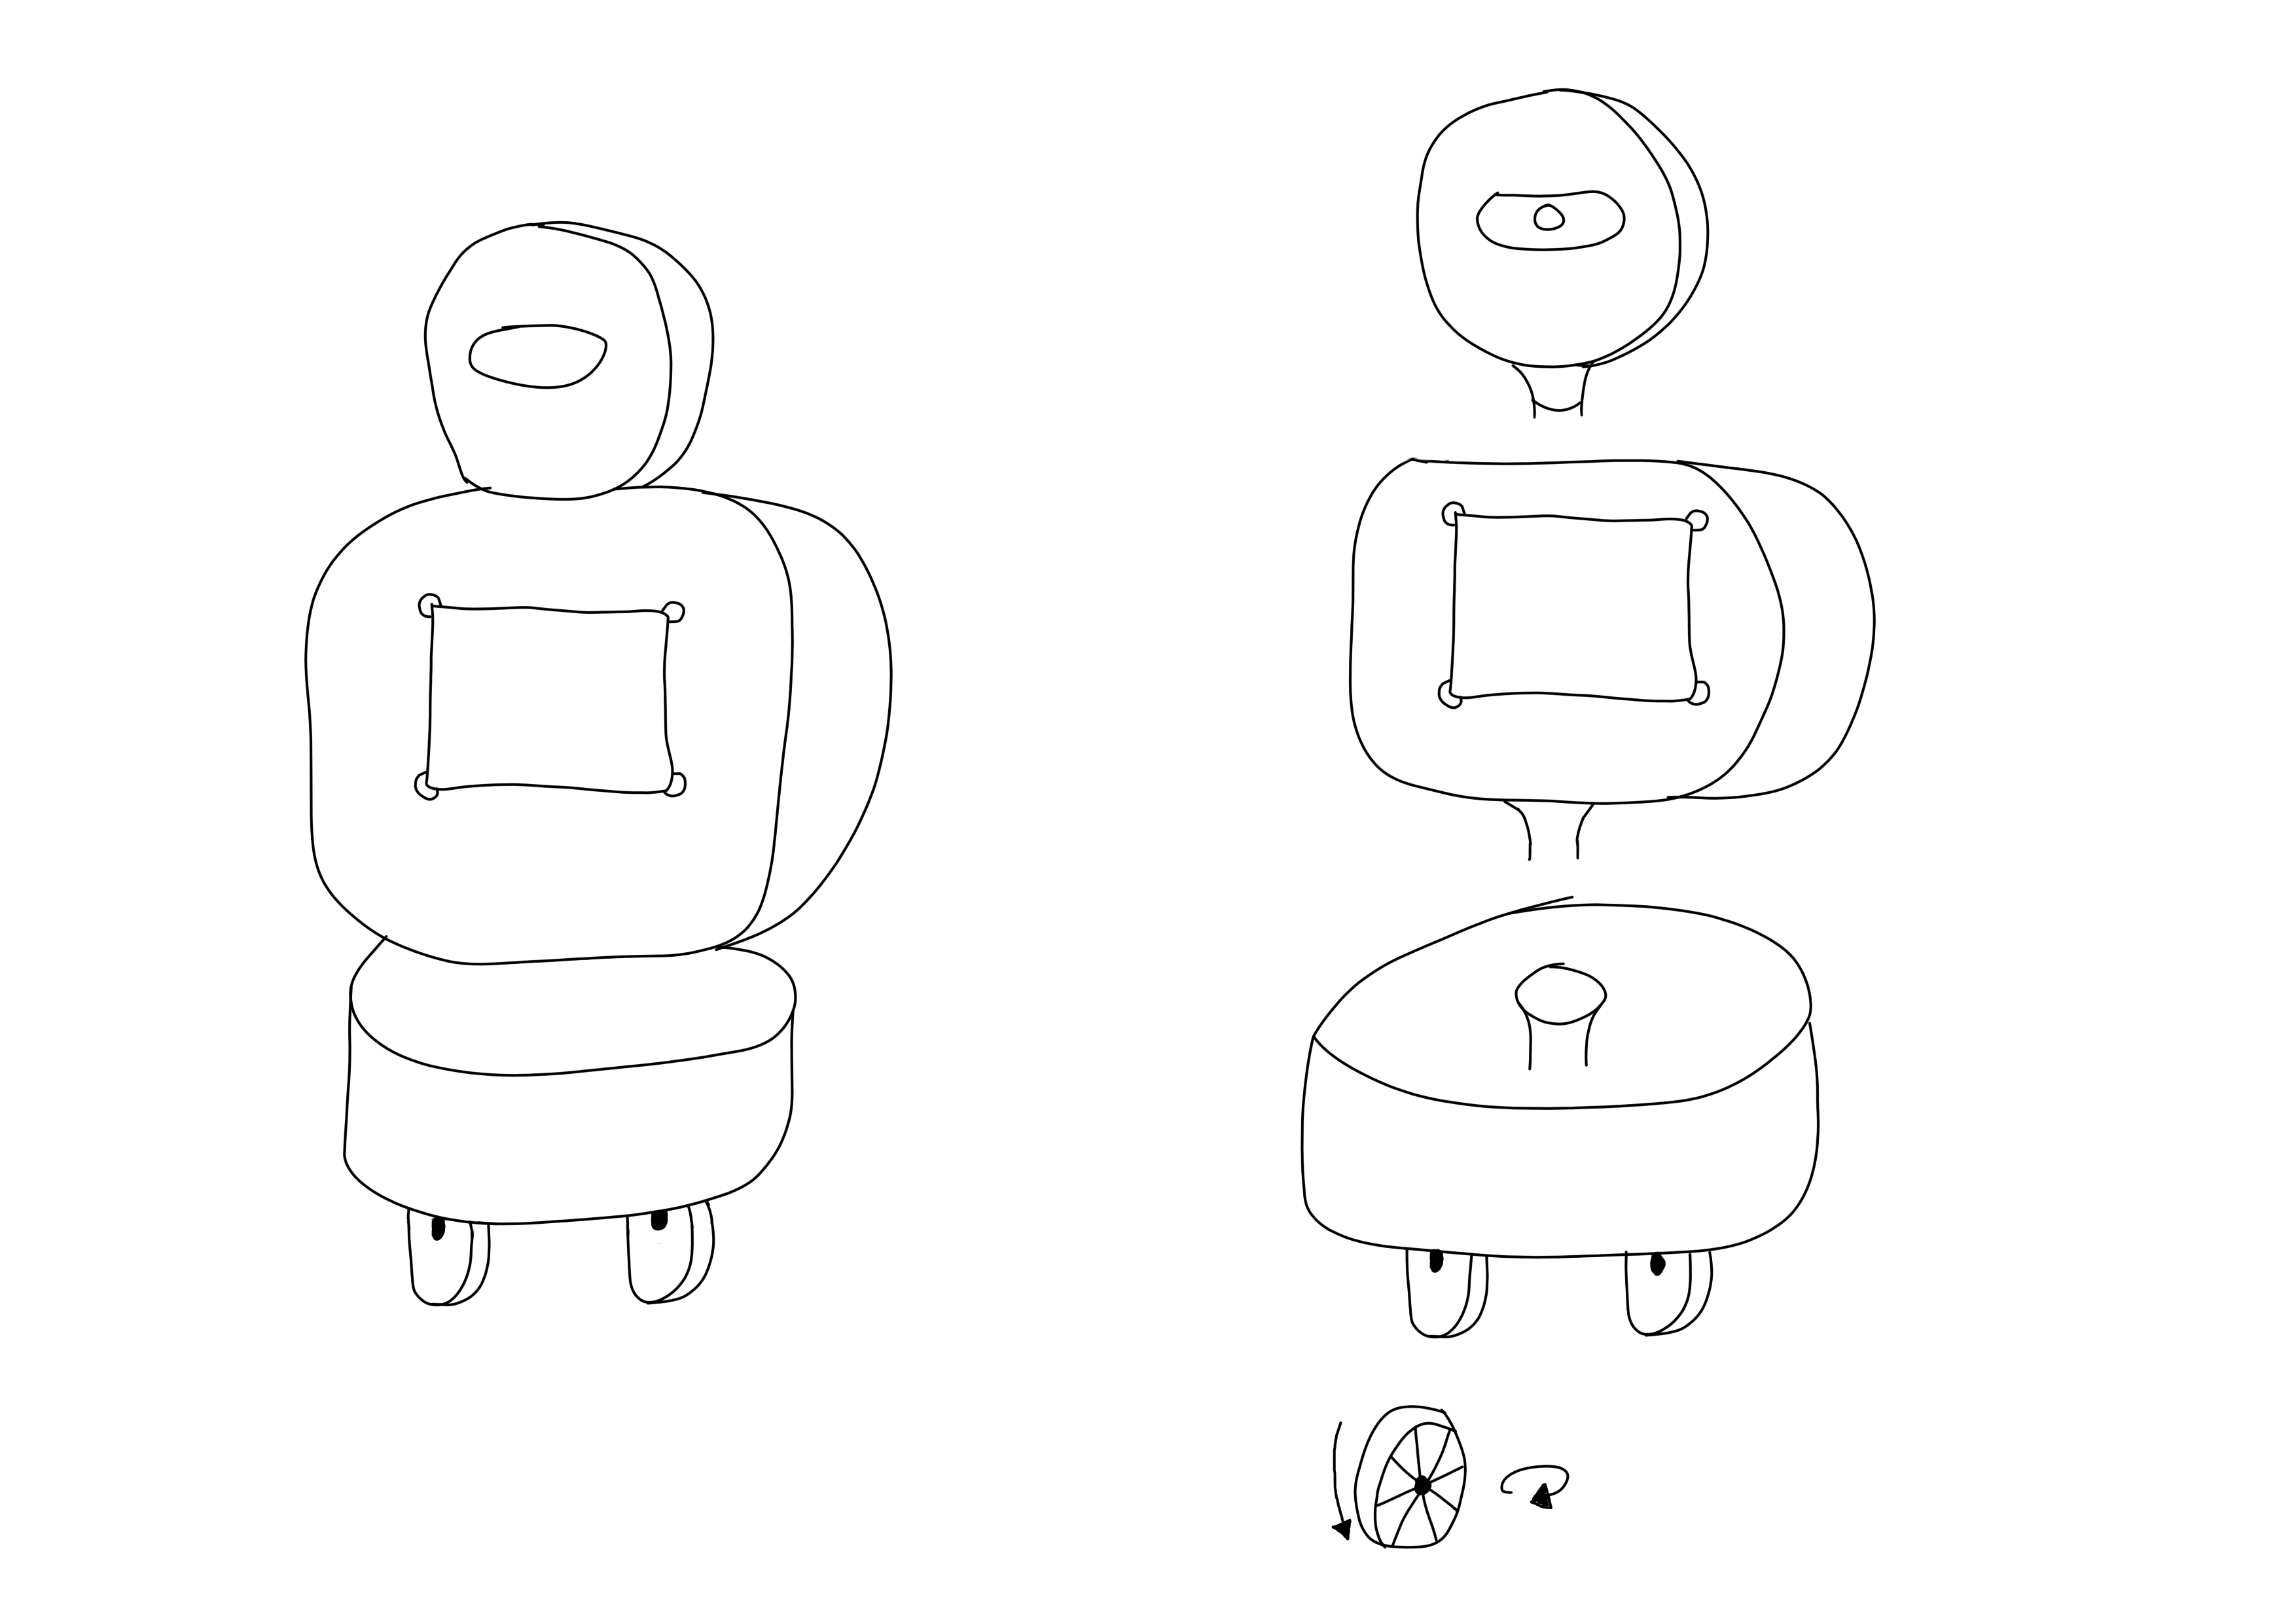 File:Sketch of Robot PRE2023 3 G5.jpg